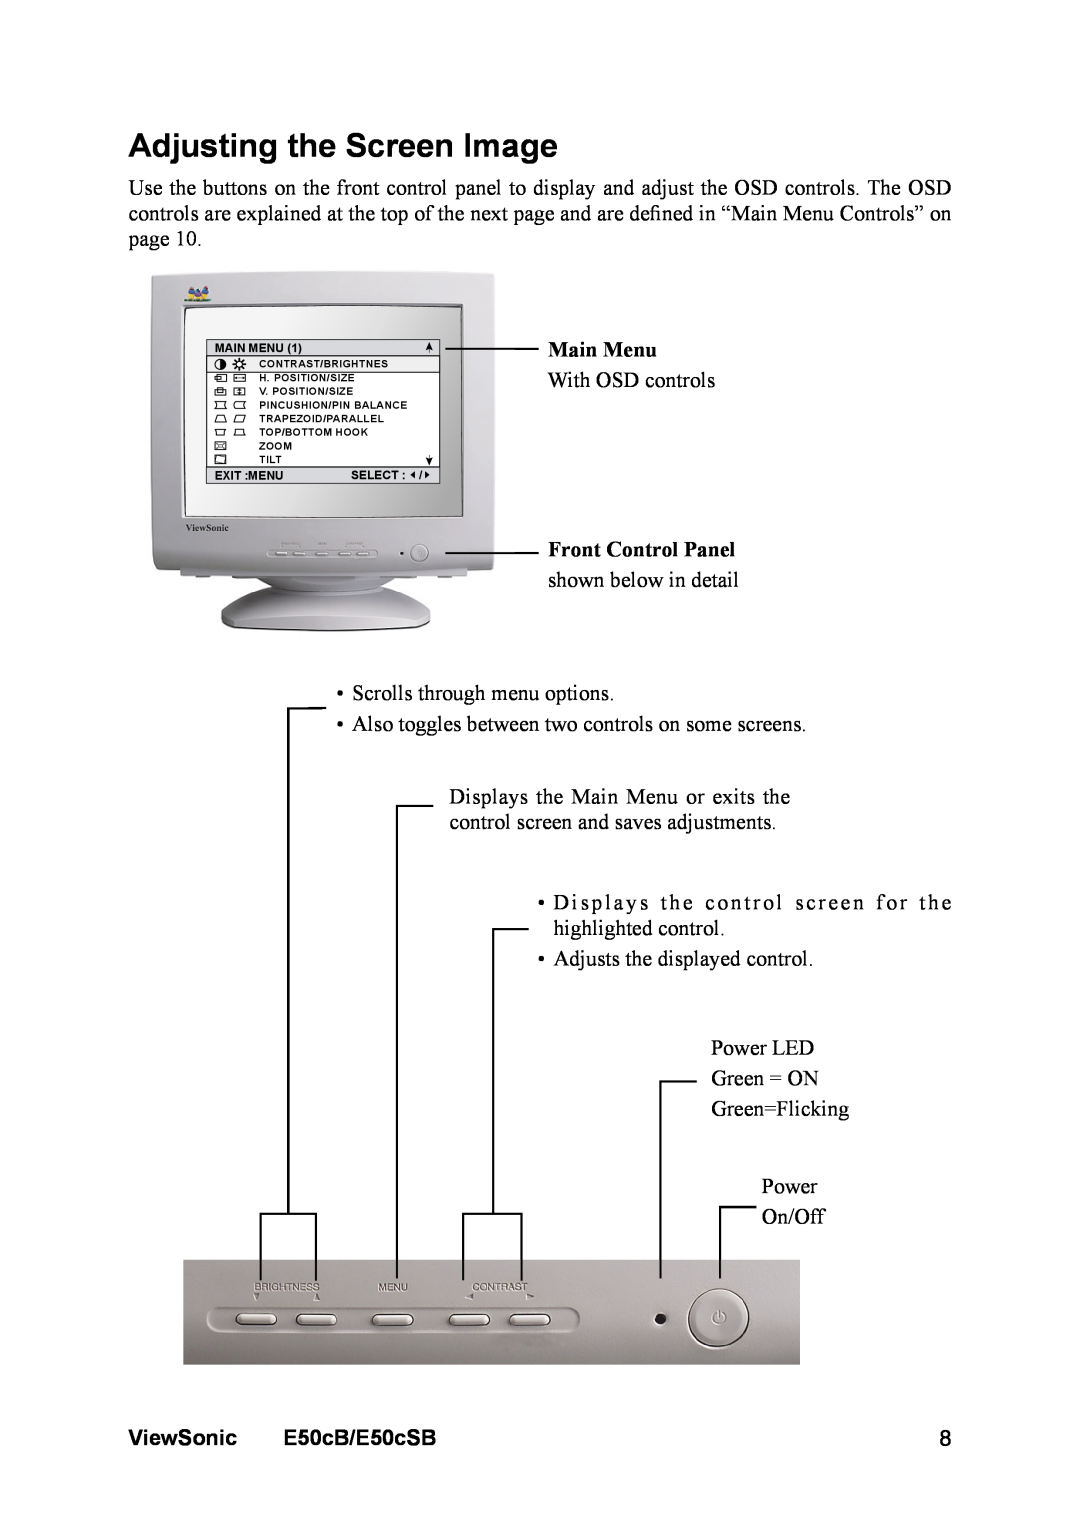 ViewSonic manual Adjusting the Screen Image, Main Menu, Front Control Panel, ViewSonic, E50cB/E50cSB 